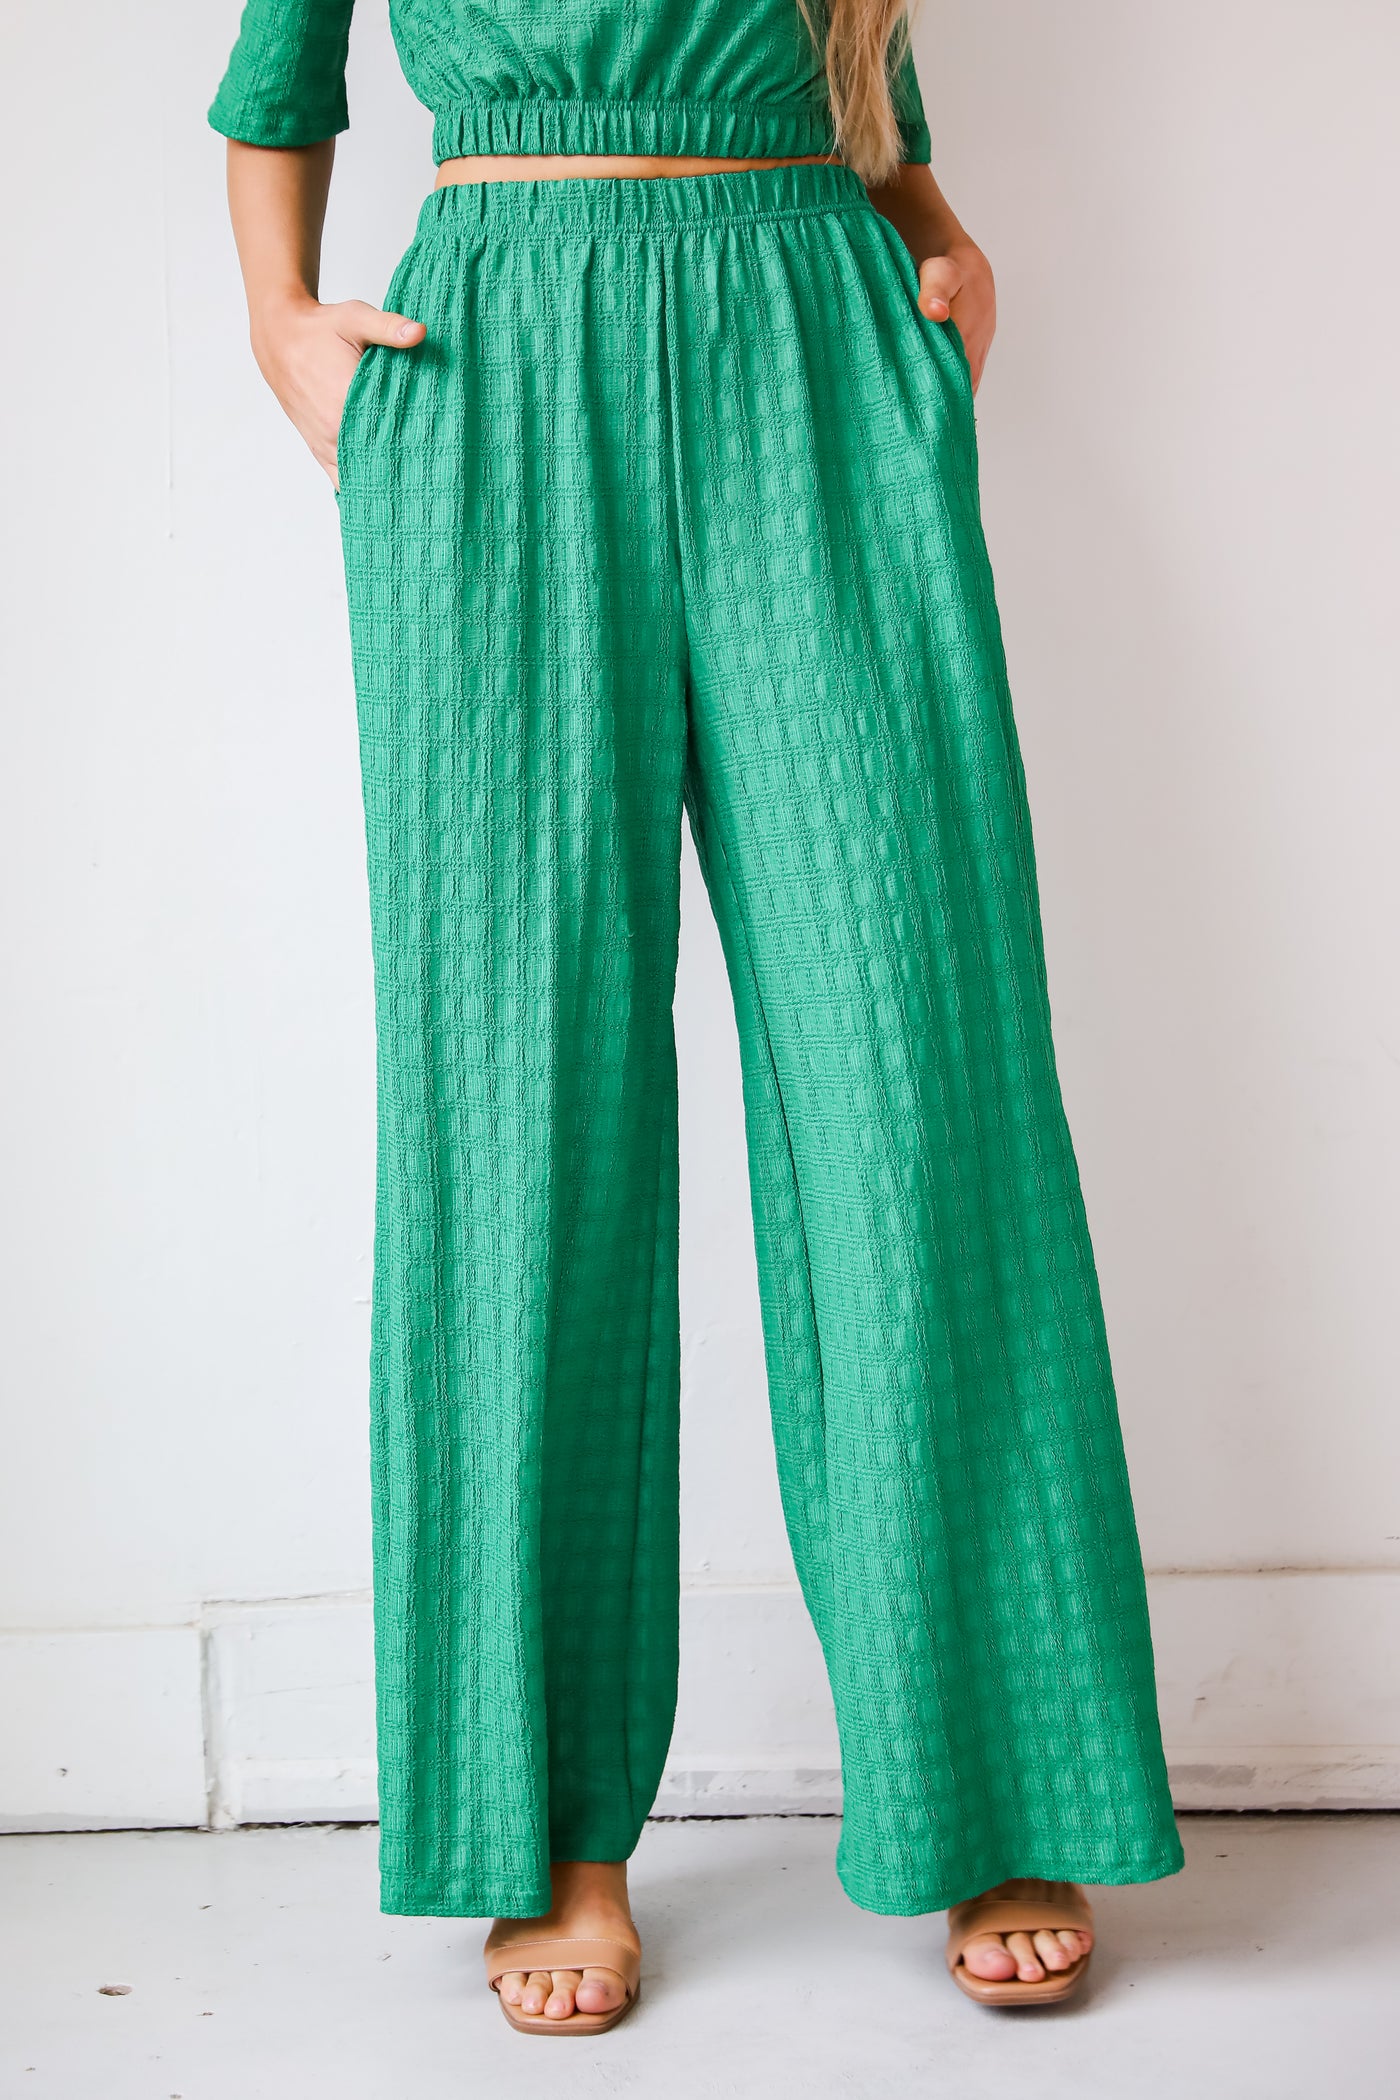 Green Textured Pants for women